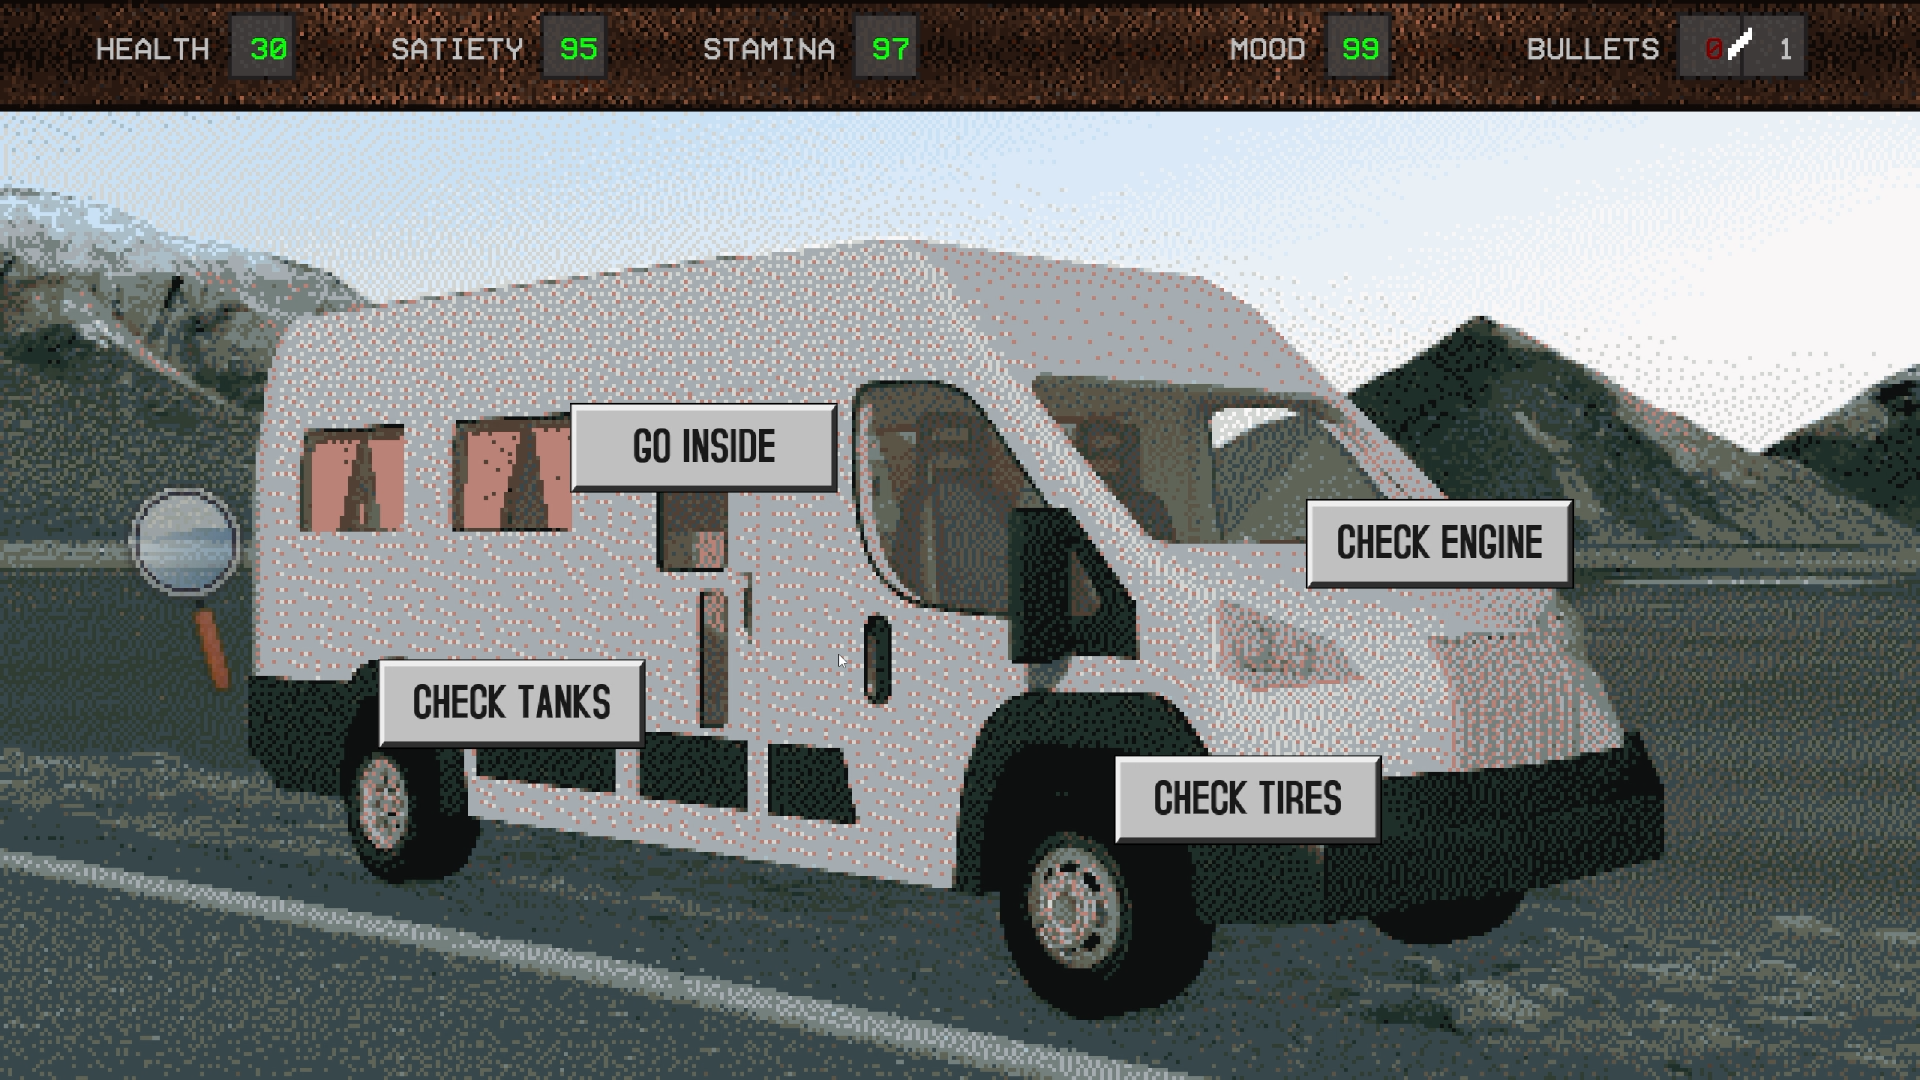 gameplay screenshot - Outside of RV